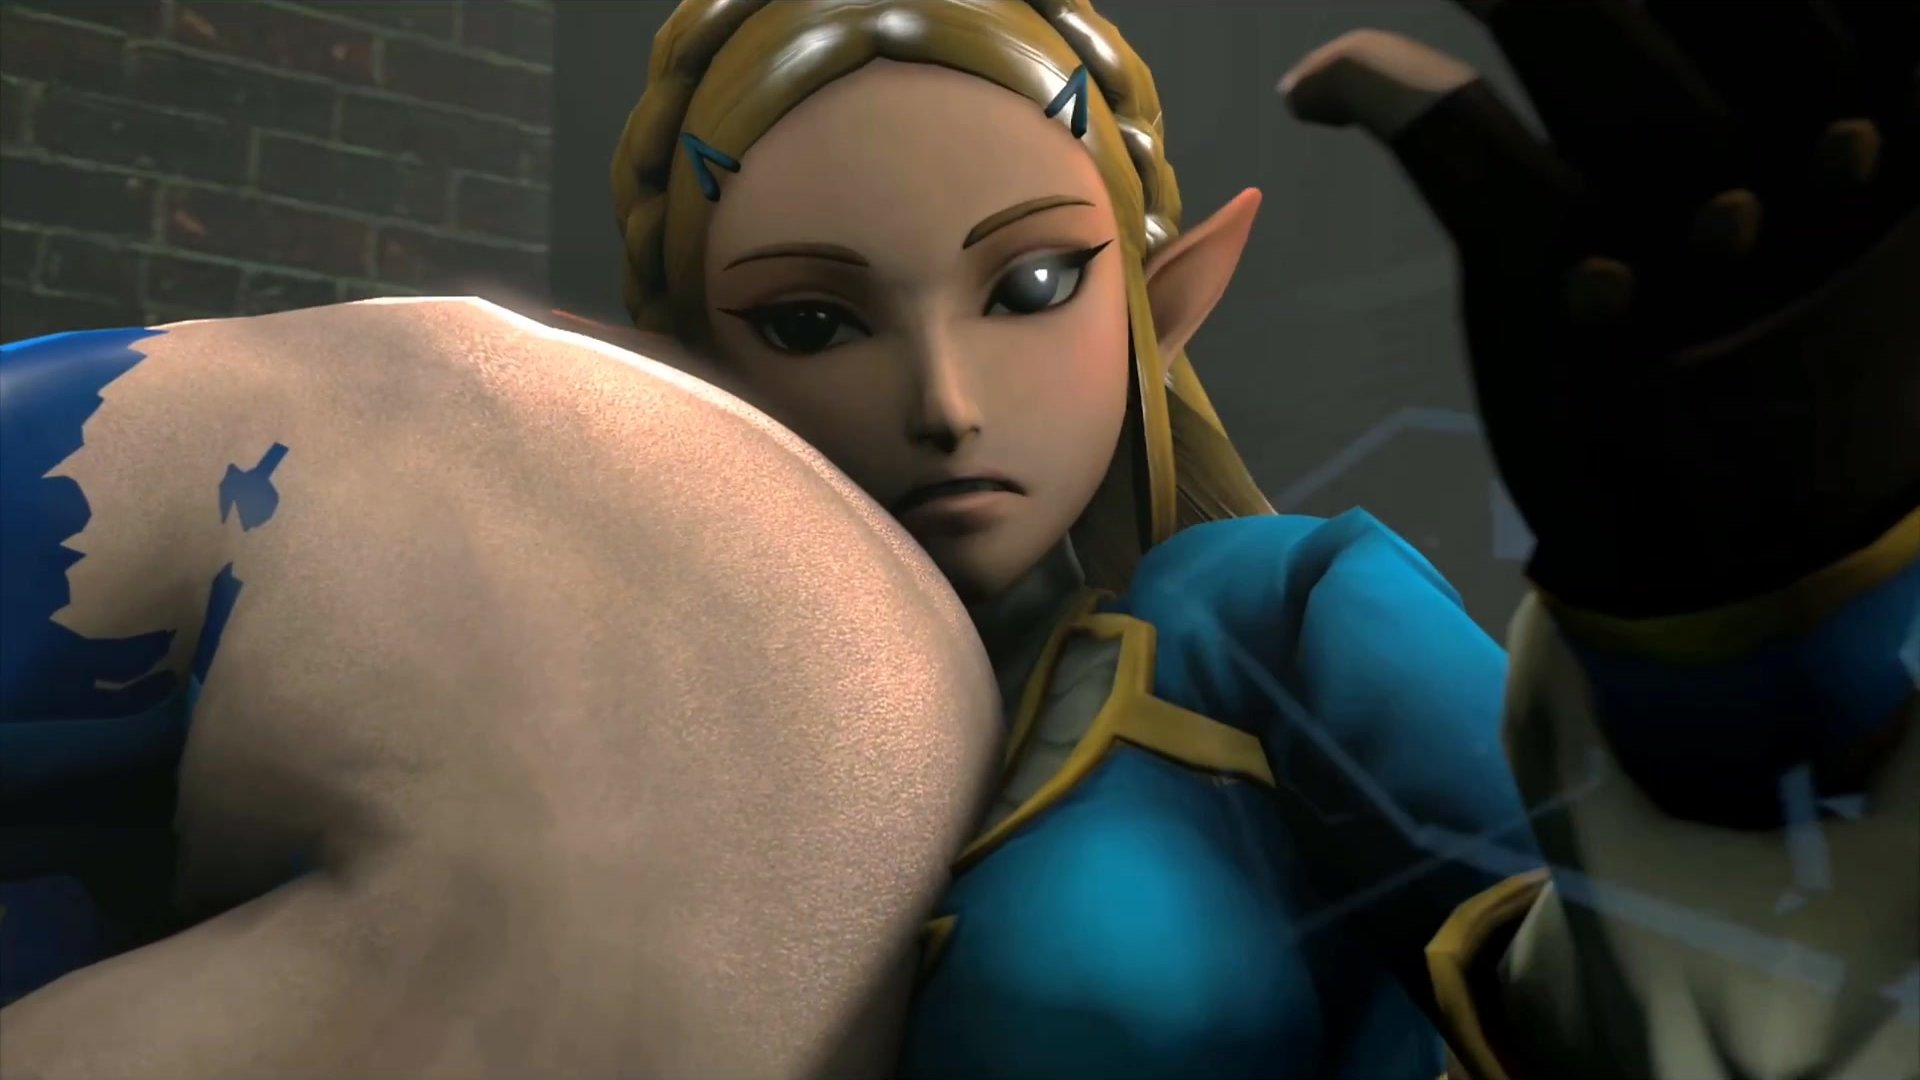 Samus vs Zelda (anal vore)